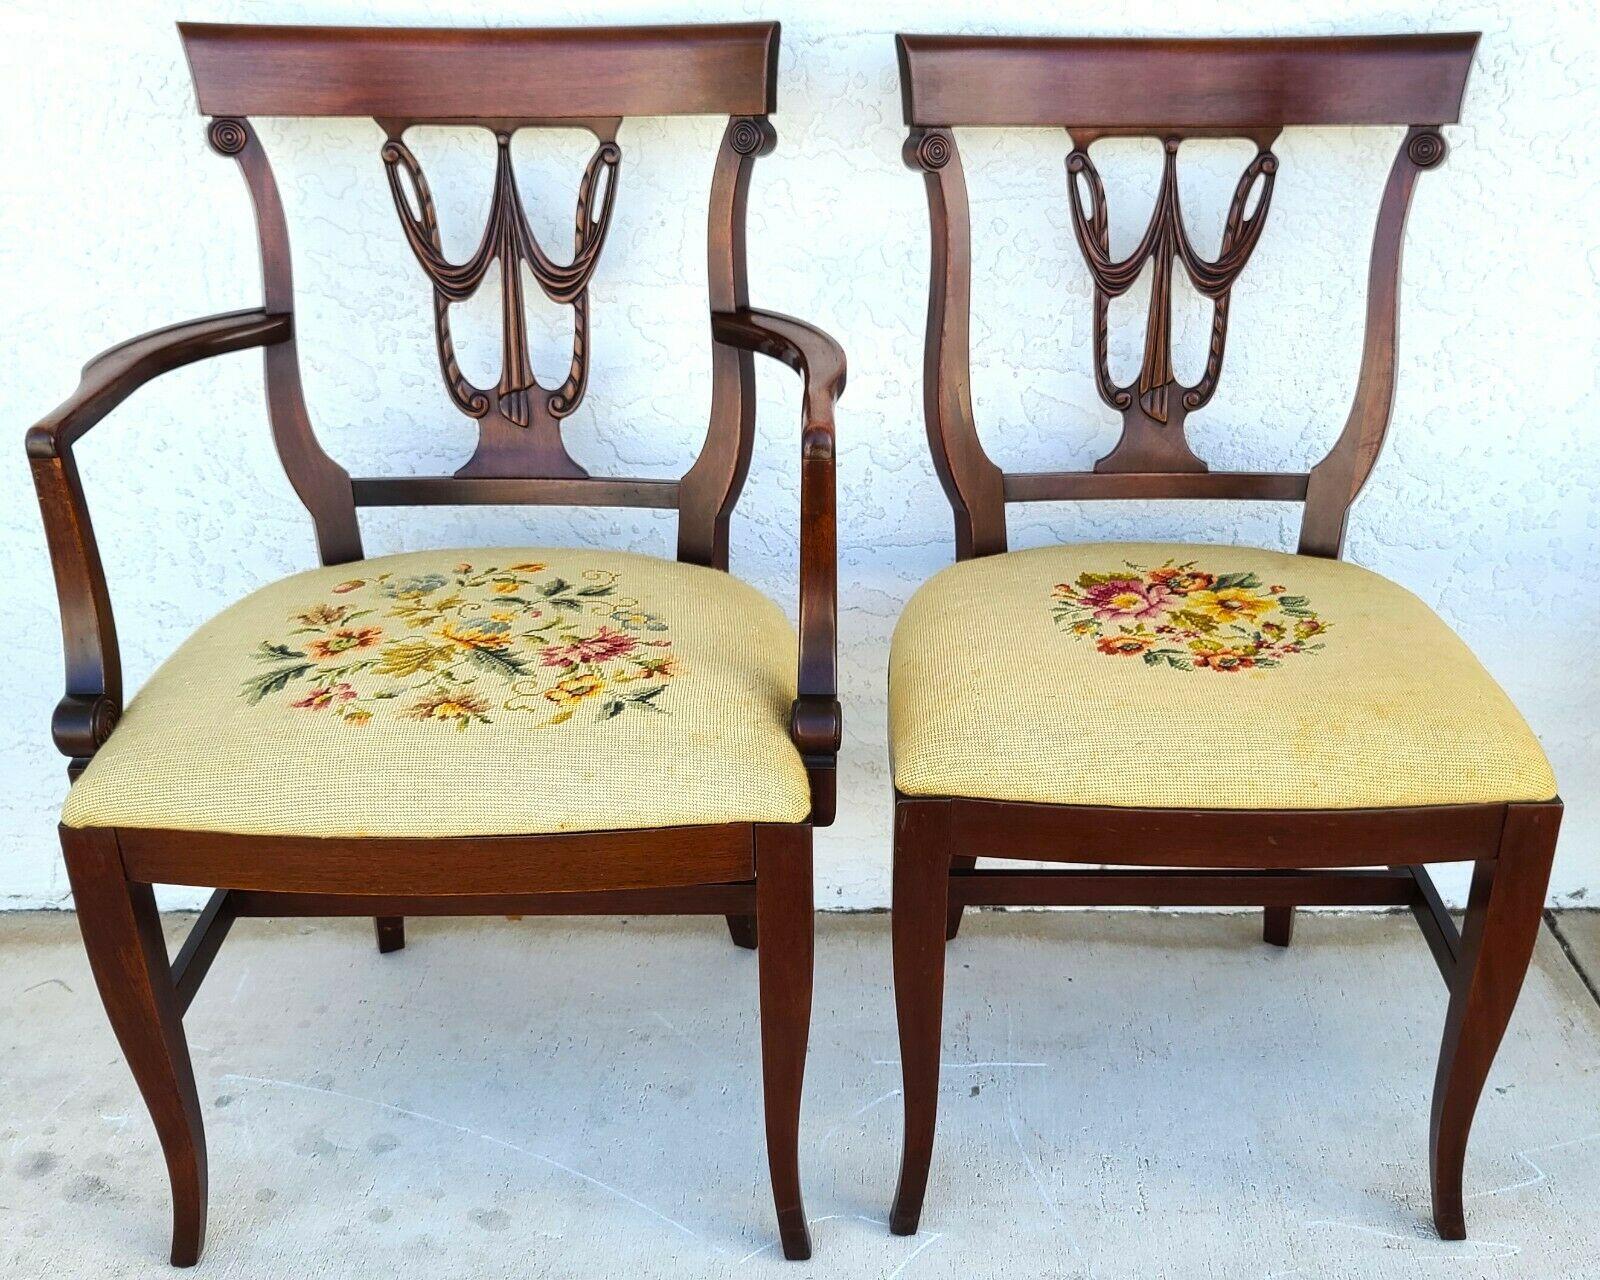 Antique 1920s Italian Regency Mahogany Dining Chairs with Needlepoint -Set of 6 4